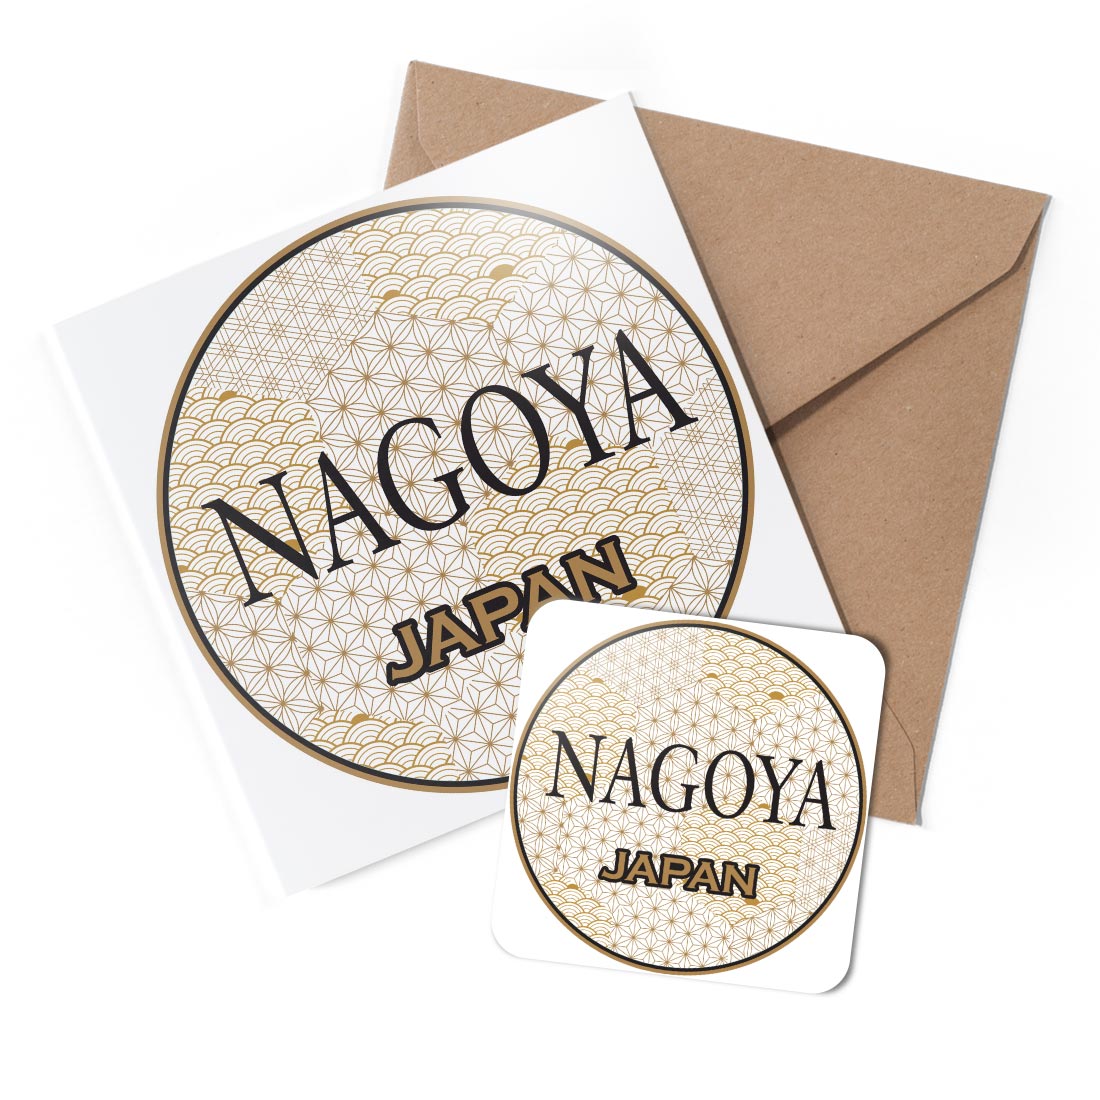 1 x Greeting Card & Coaster Set - Nagoya Japan Asian Texture #60443